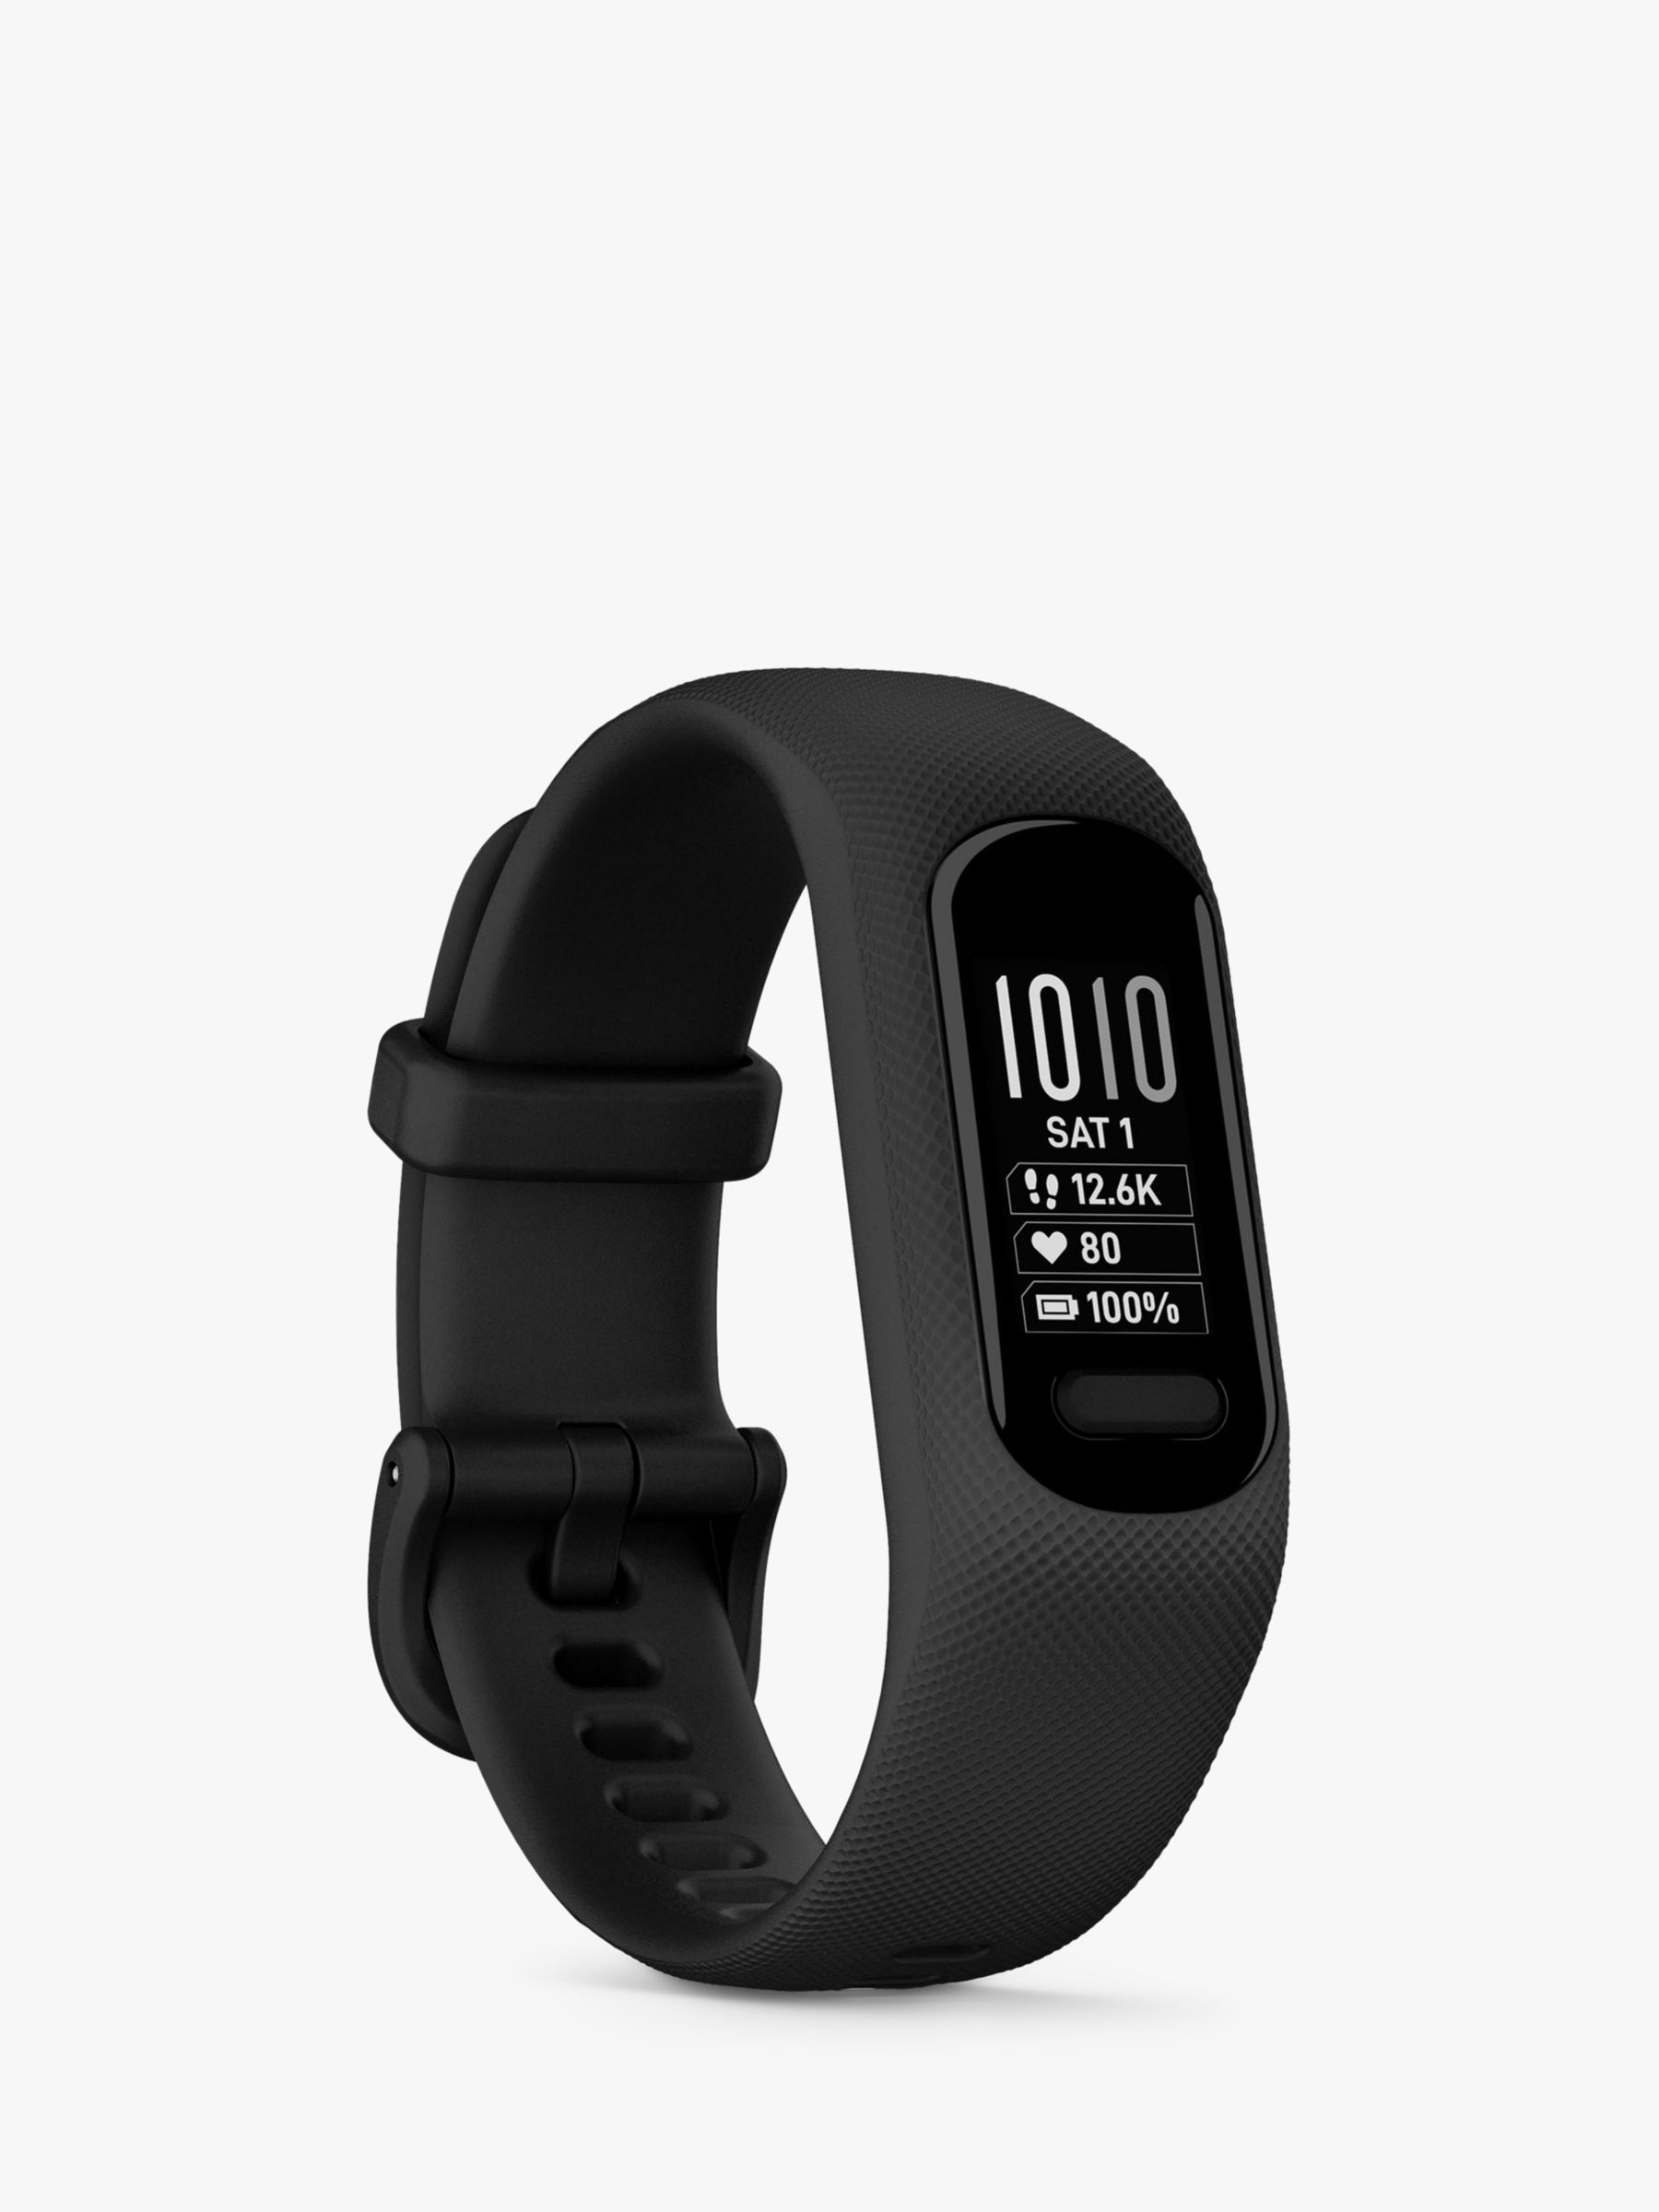 Garmin vivosmart Fitness Tracker with Wrist Based Heart Rate, Small/Medium, Black